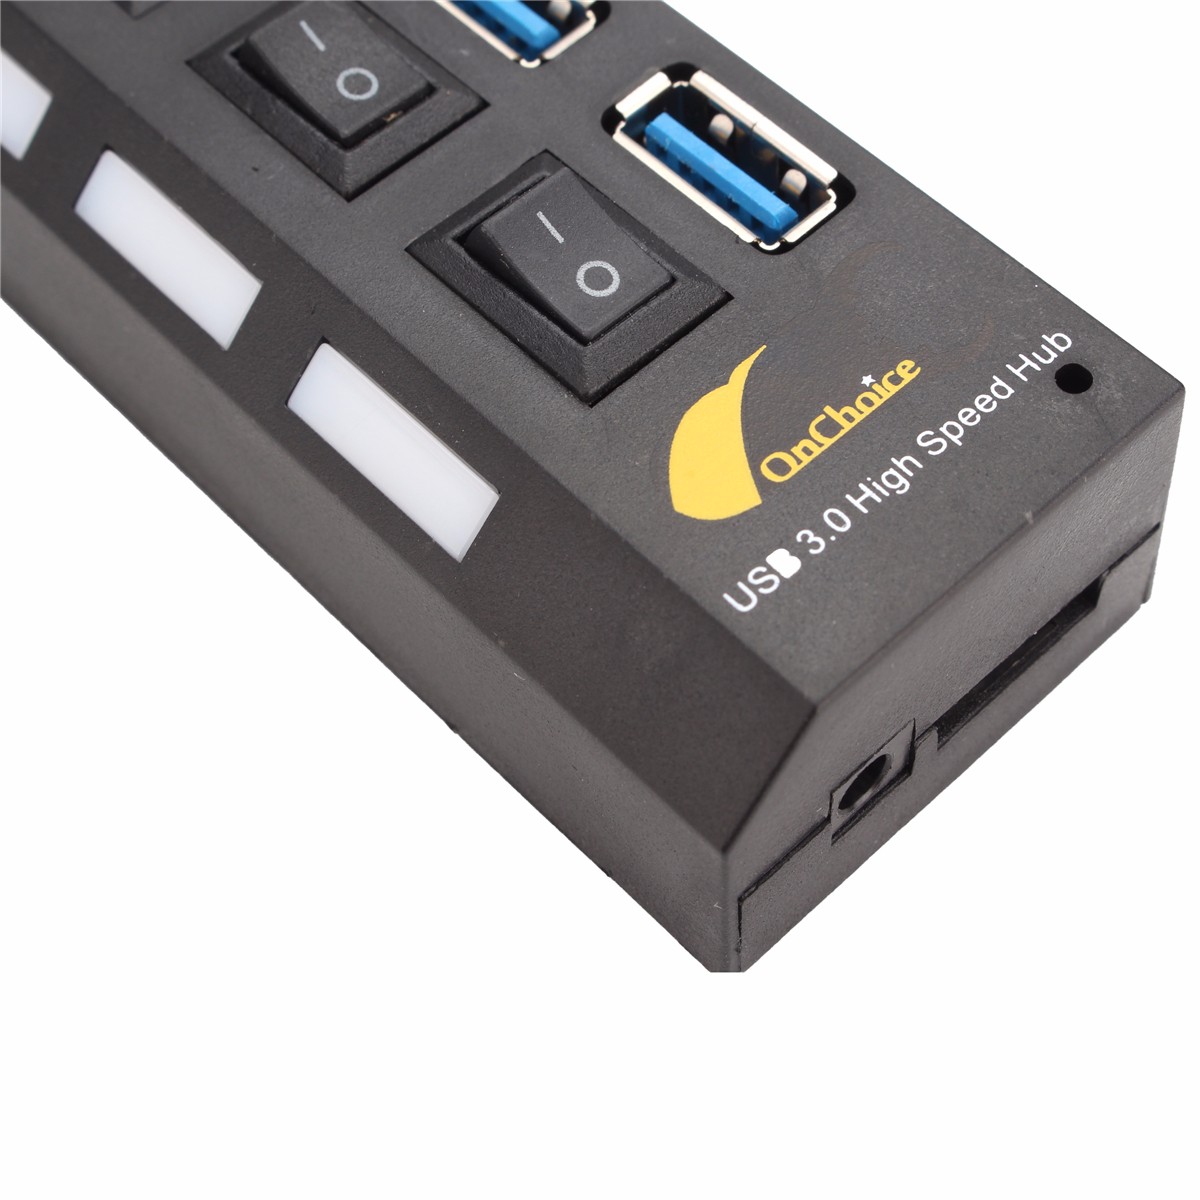 ONCHOICE 7Port USB 3.0 Hub On/Off Switch EU US UK AC Power Adapter For Laptop Desktop 6